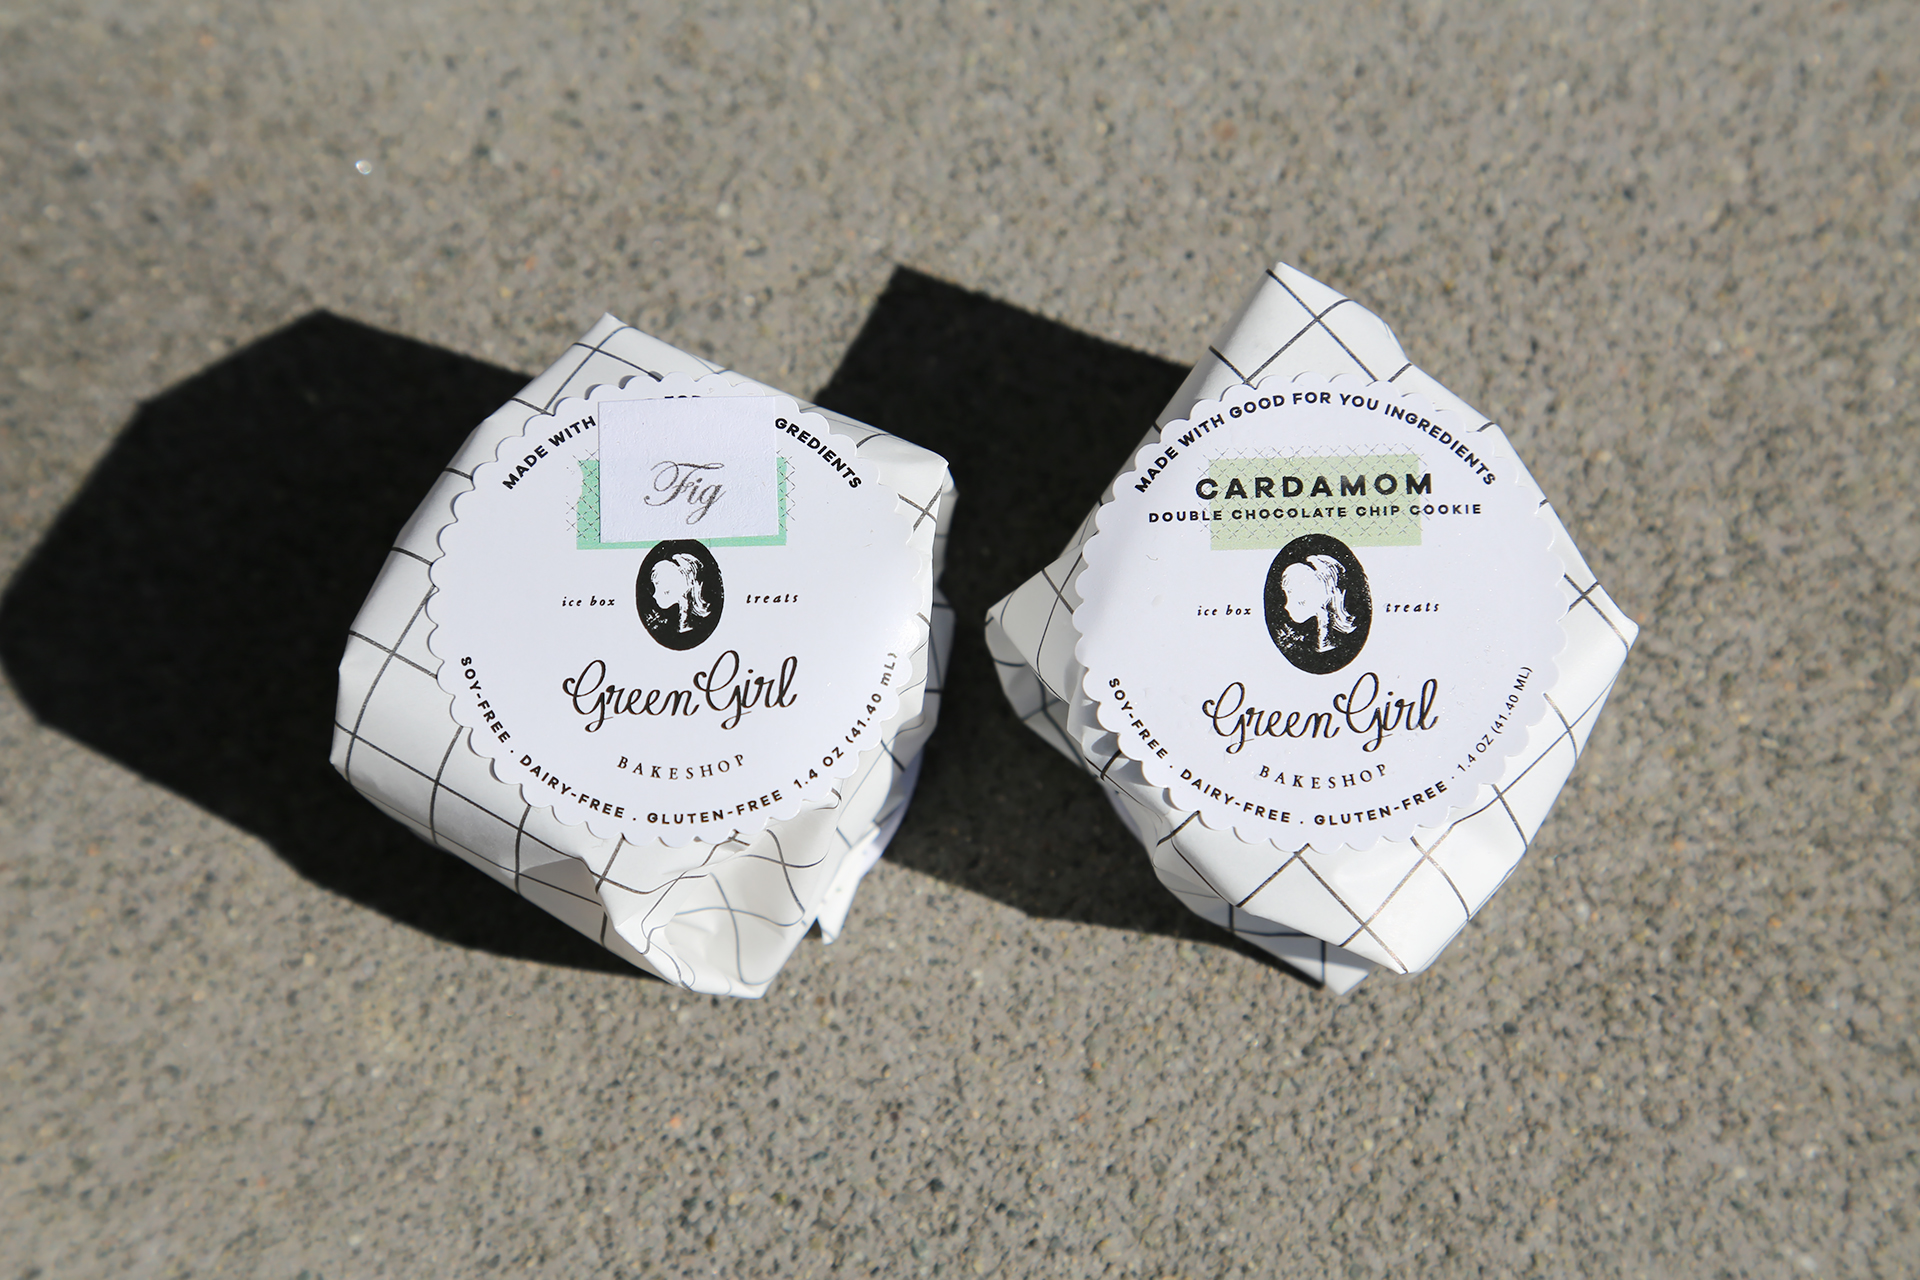 Green Girl: Cardamom and balsamic fig ice cream sandwiches